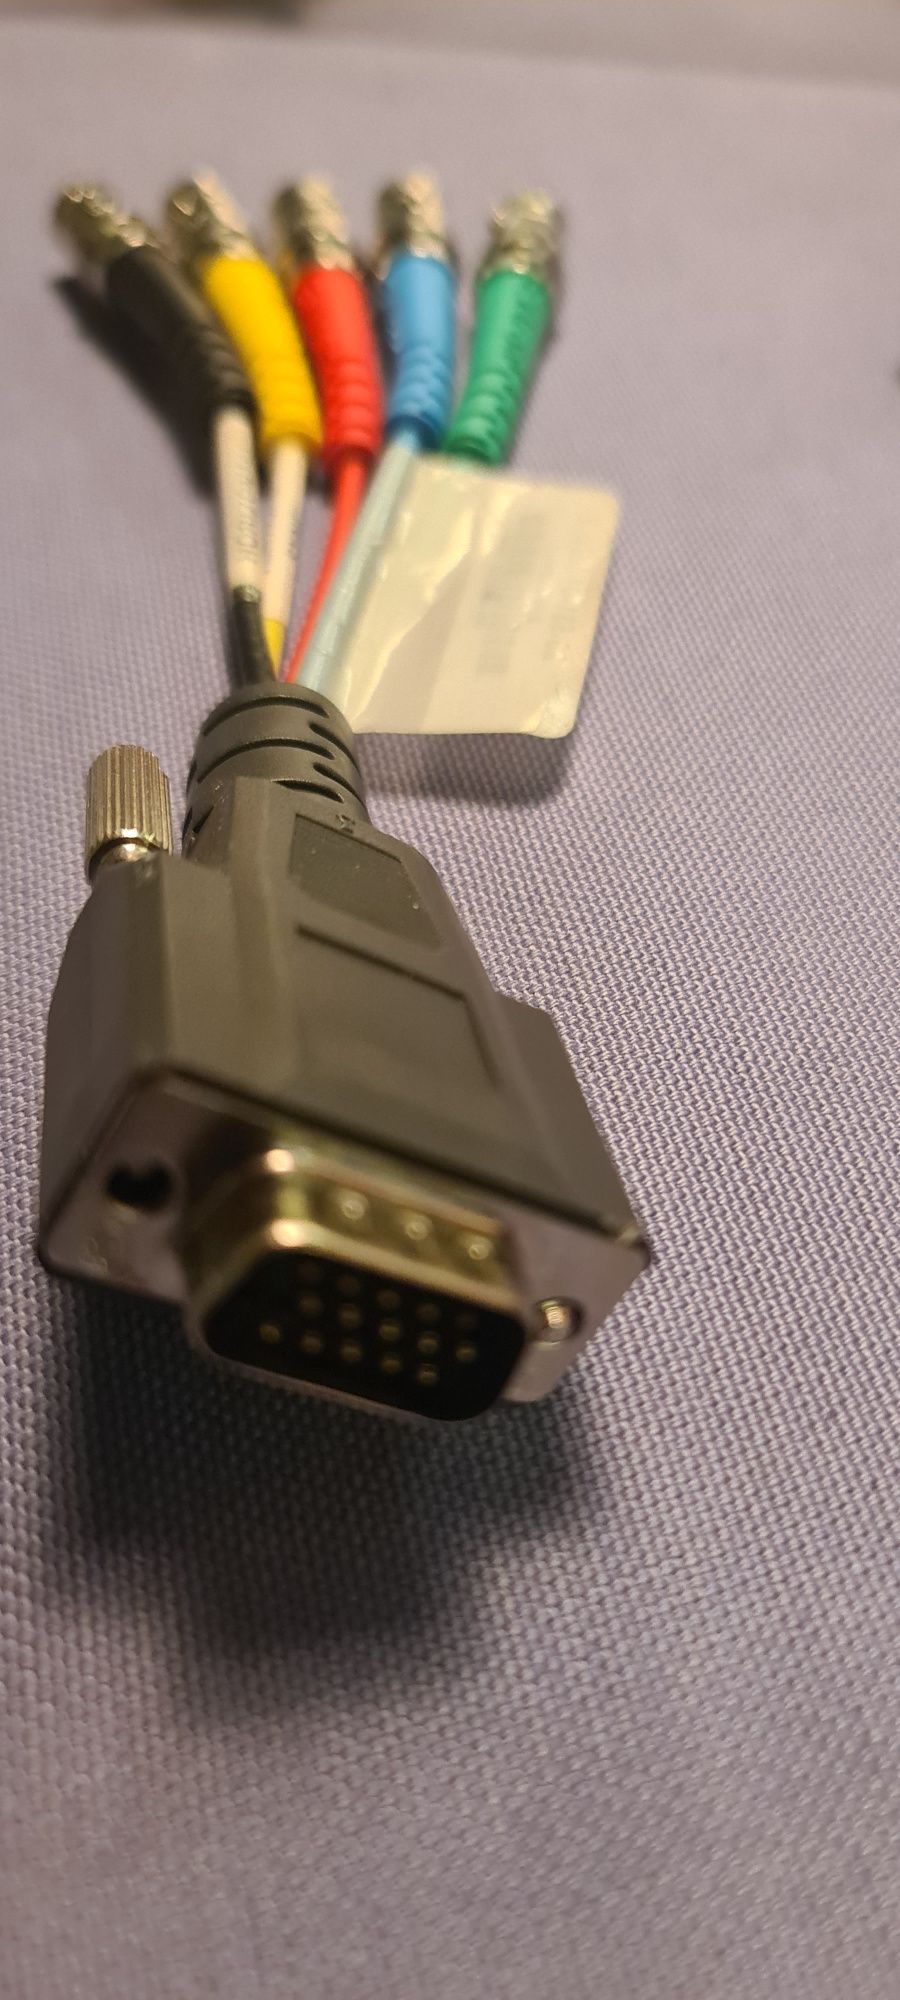 15-pin HD Male VGA to BNC Female Mini High Resolution Cables